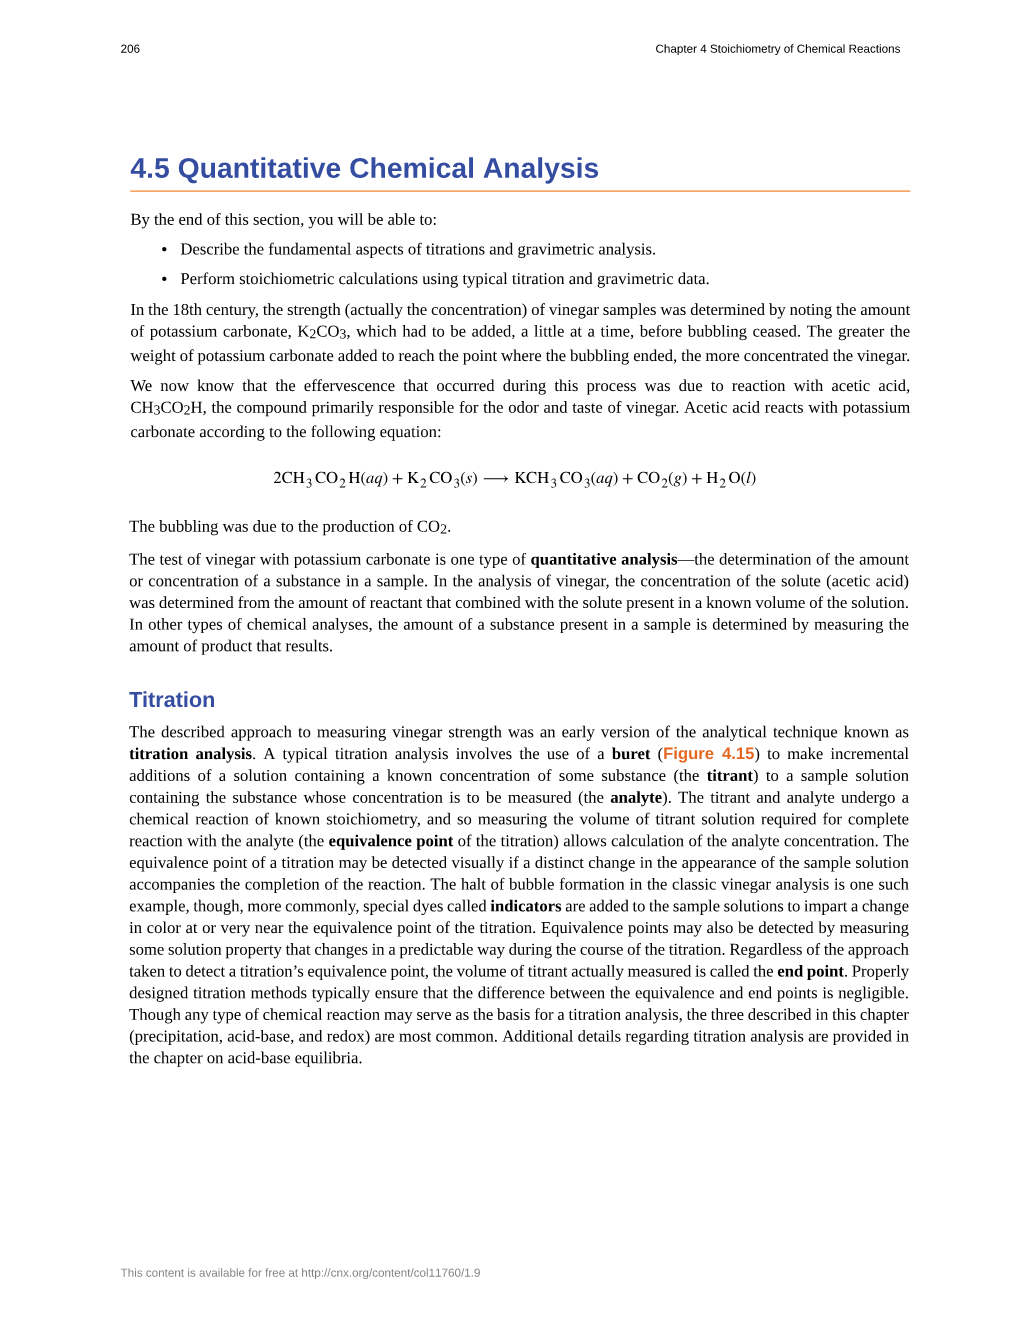 4.5 Quantitative Chemical Analysis